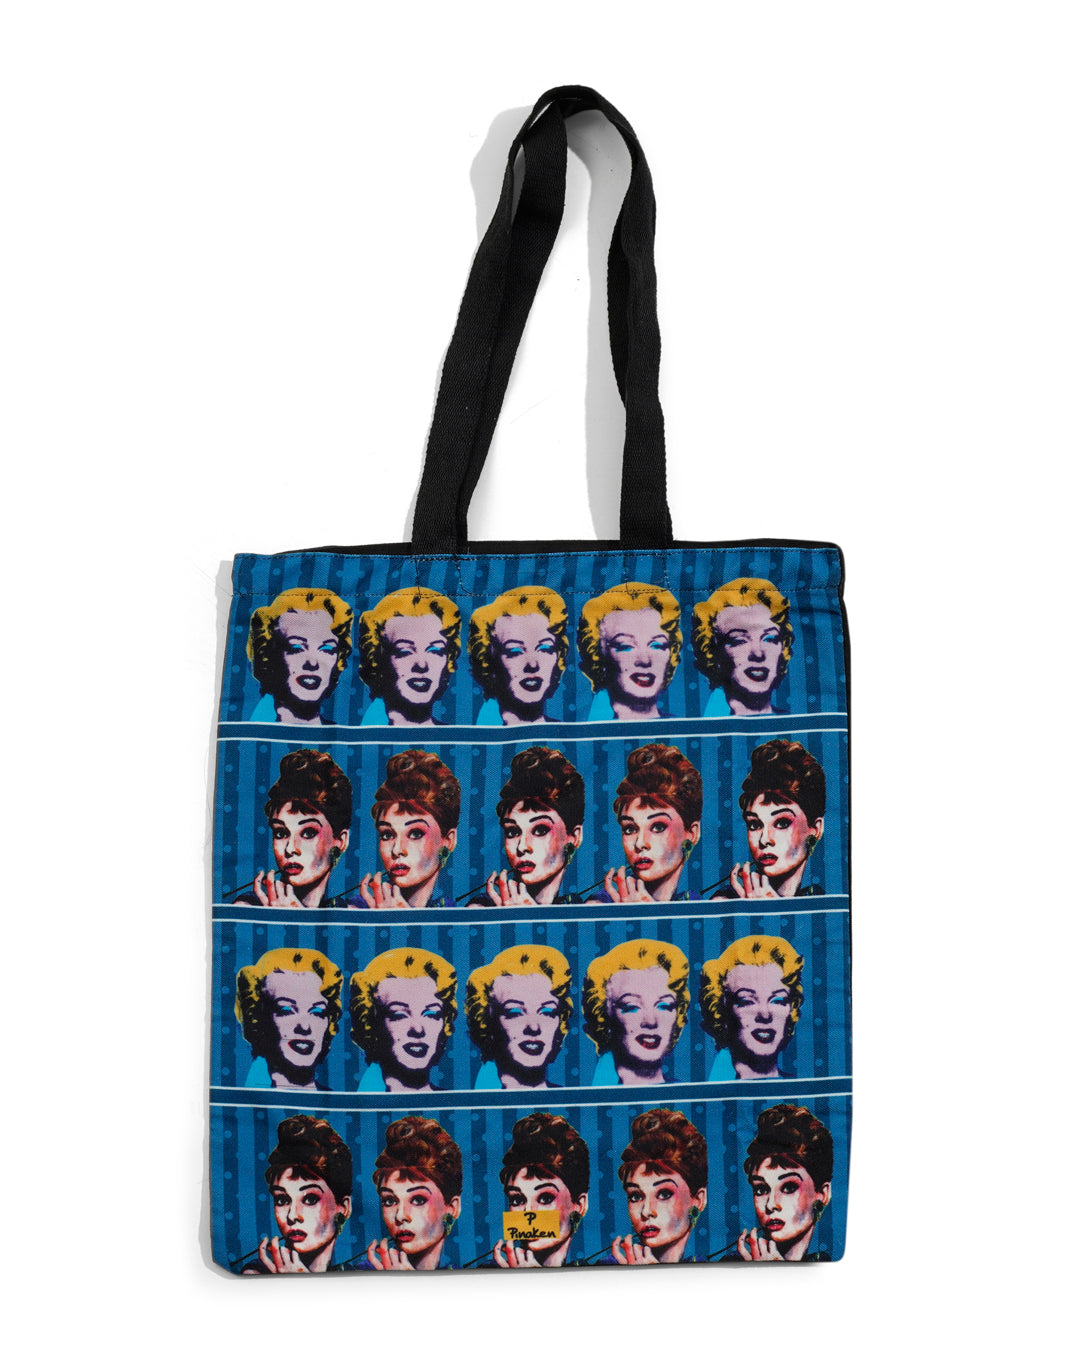 Lady Monroe, Meow, Hollywood Divas Tote Bags Set Of 3